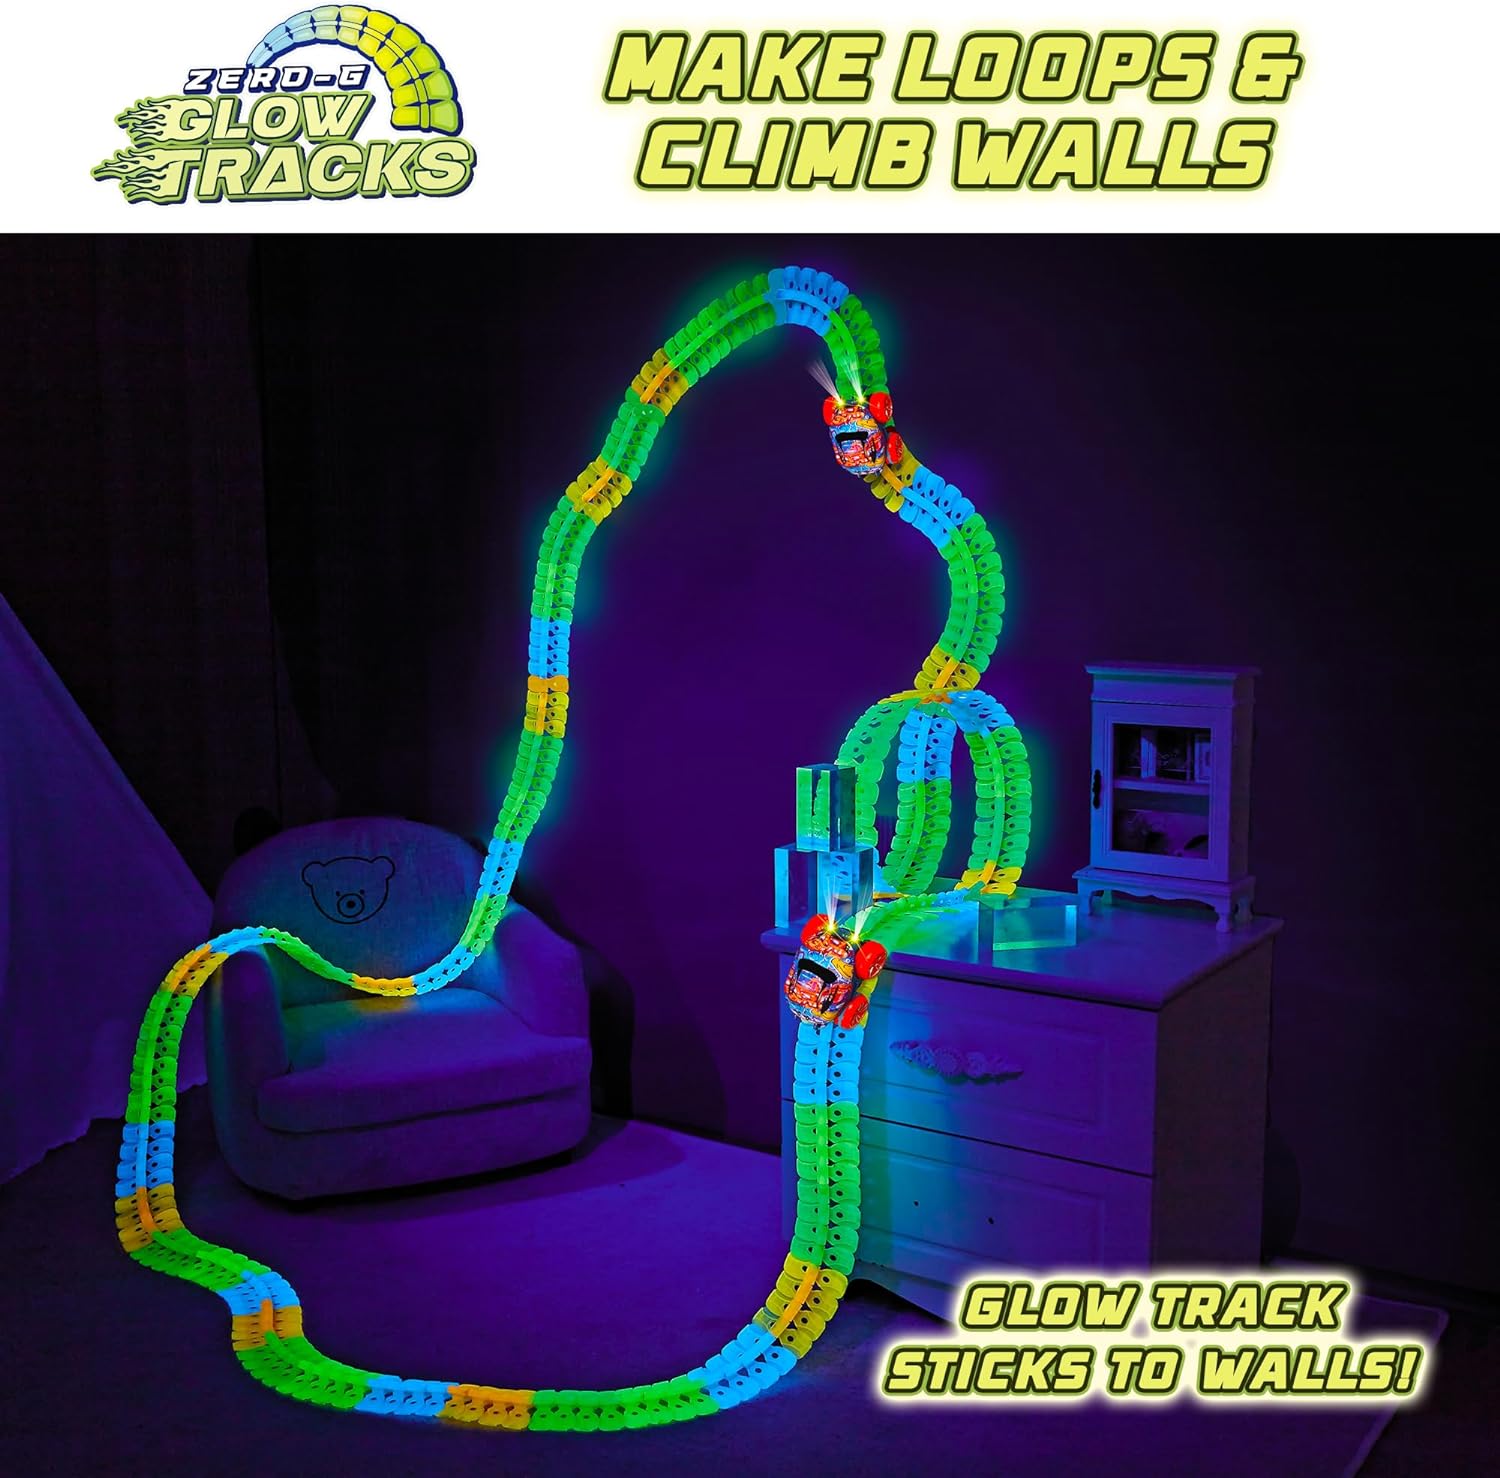 USA Toyz 360pk Small Glow in the Dark Track Set Compatible (Unisex) 